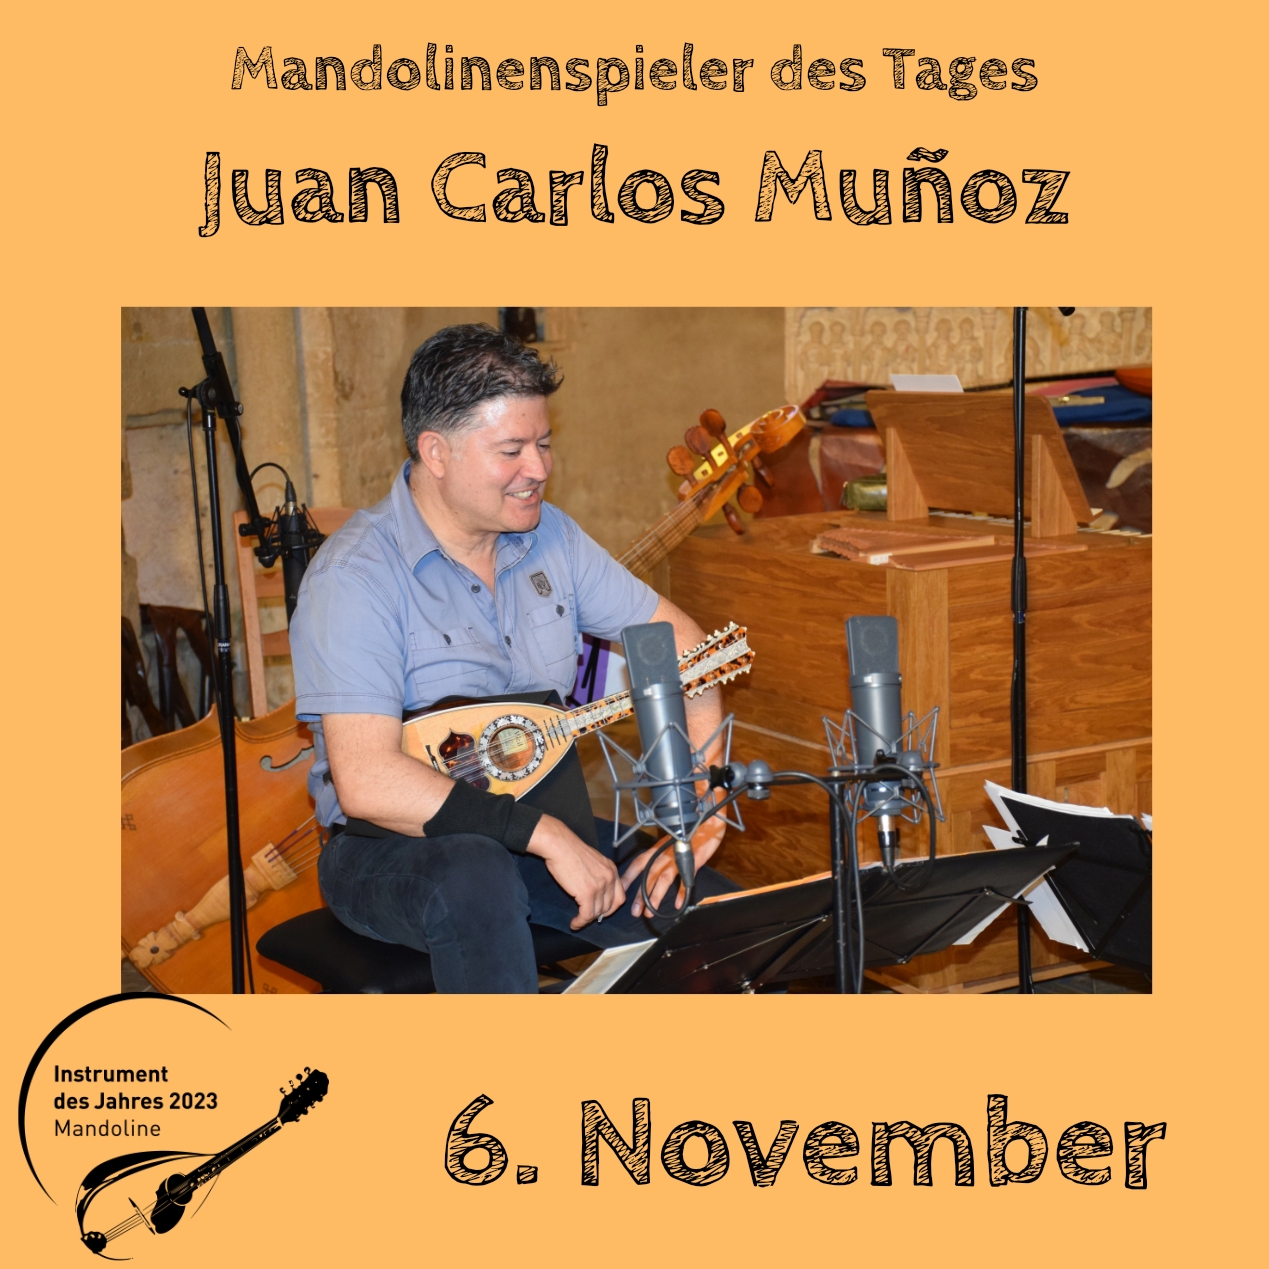 6. November - Juan Carlos Muñoz Instrument des Jahres 2023 Mandolinenspieler Mandolinenspielerin des Tages